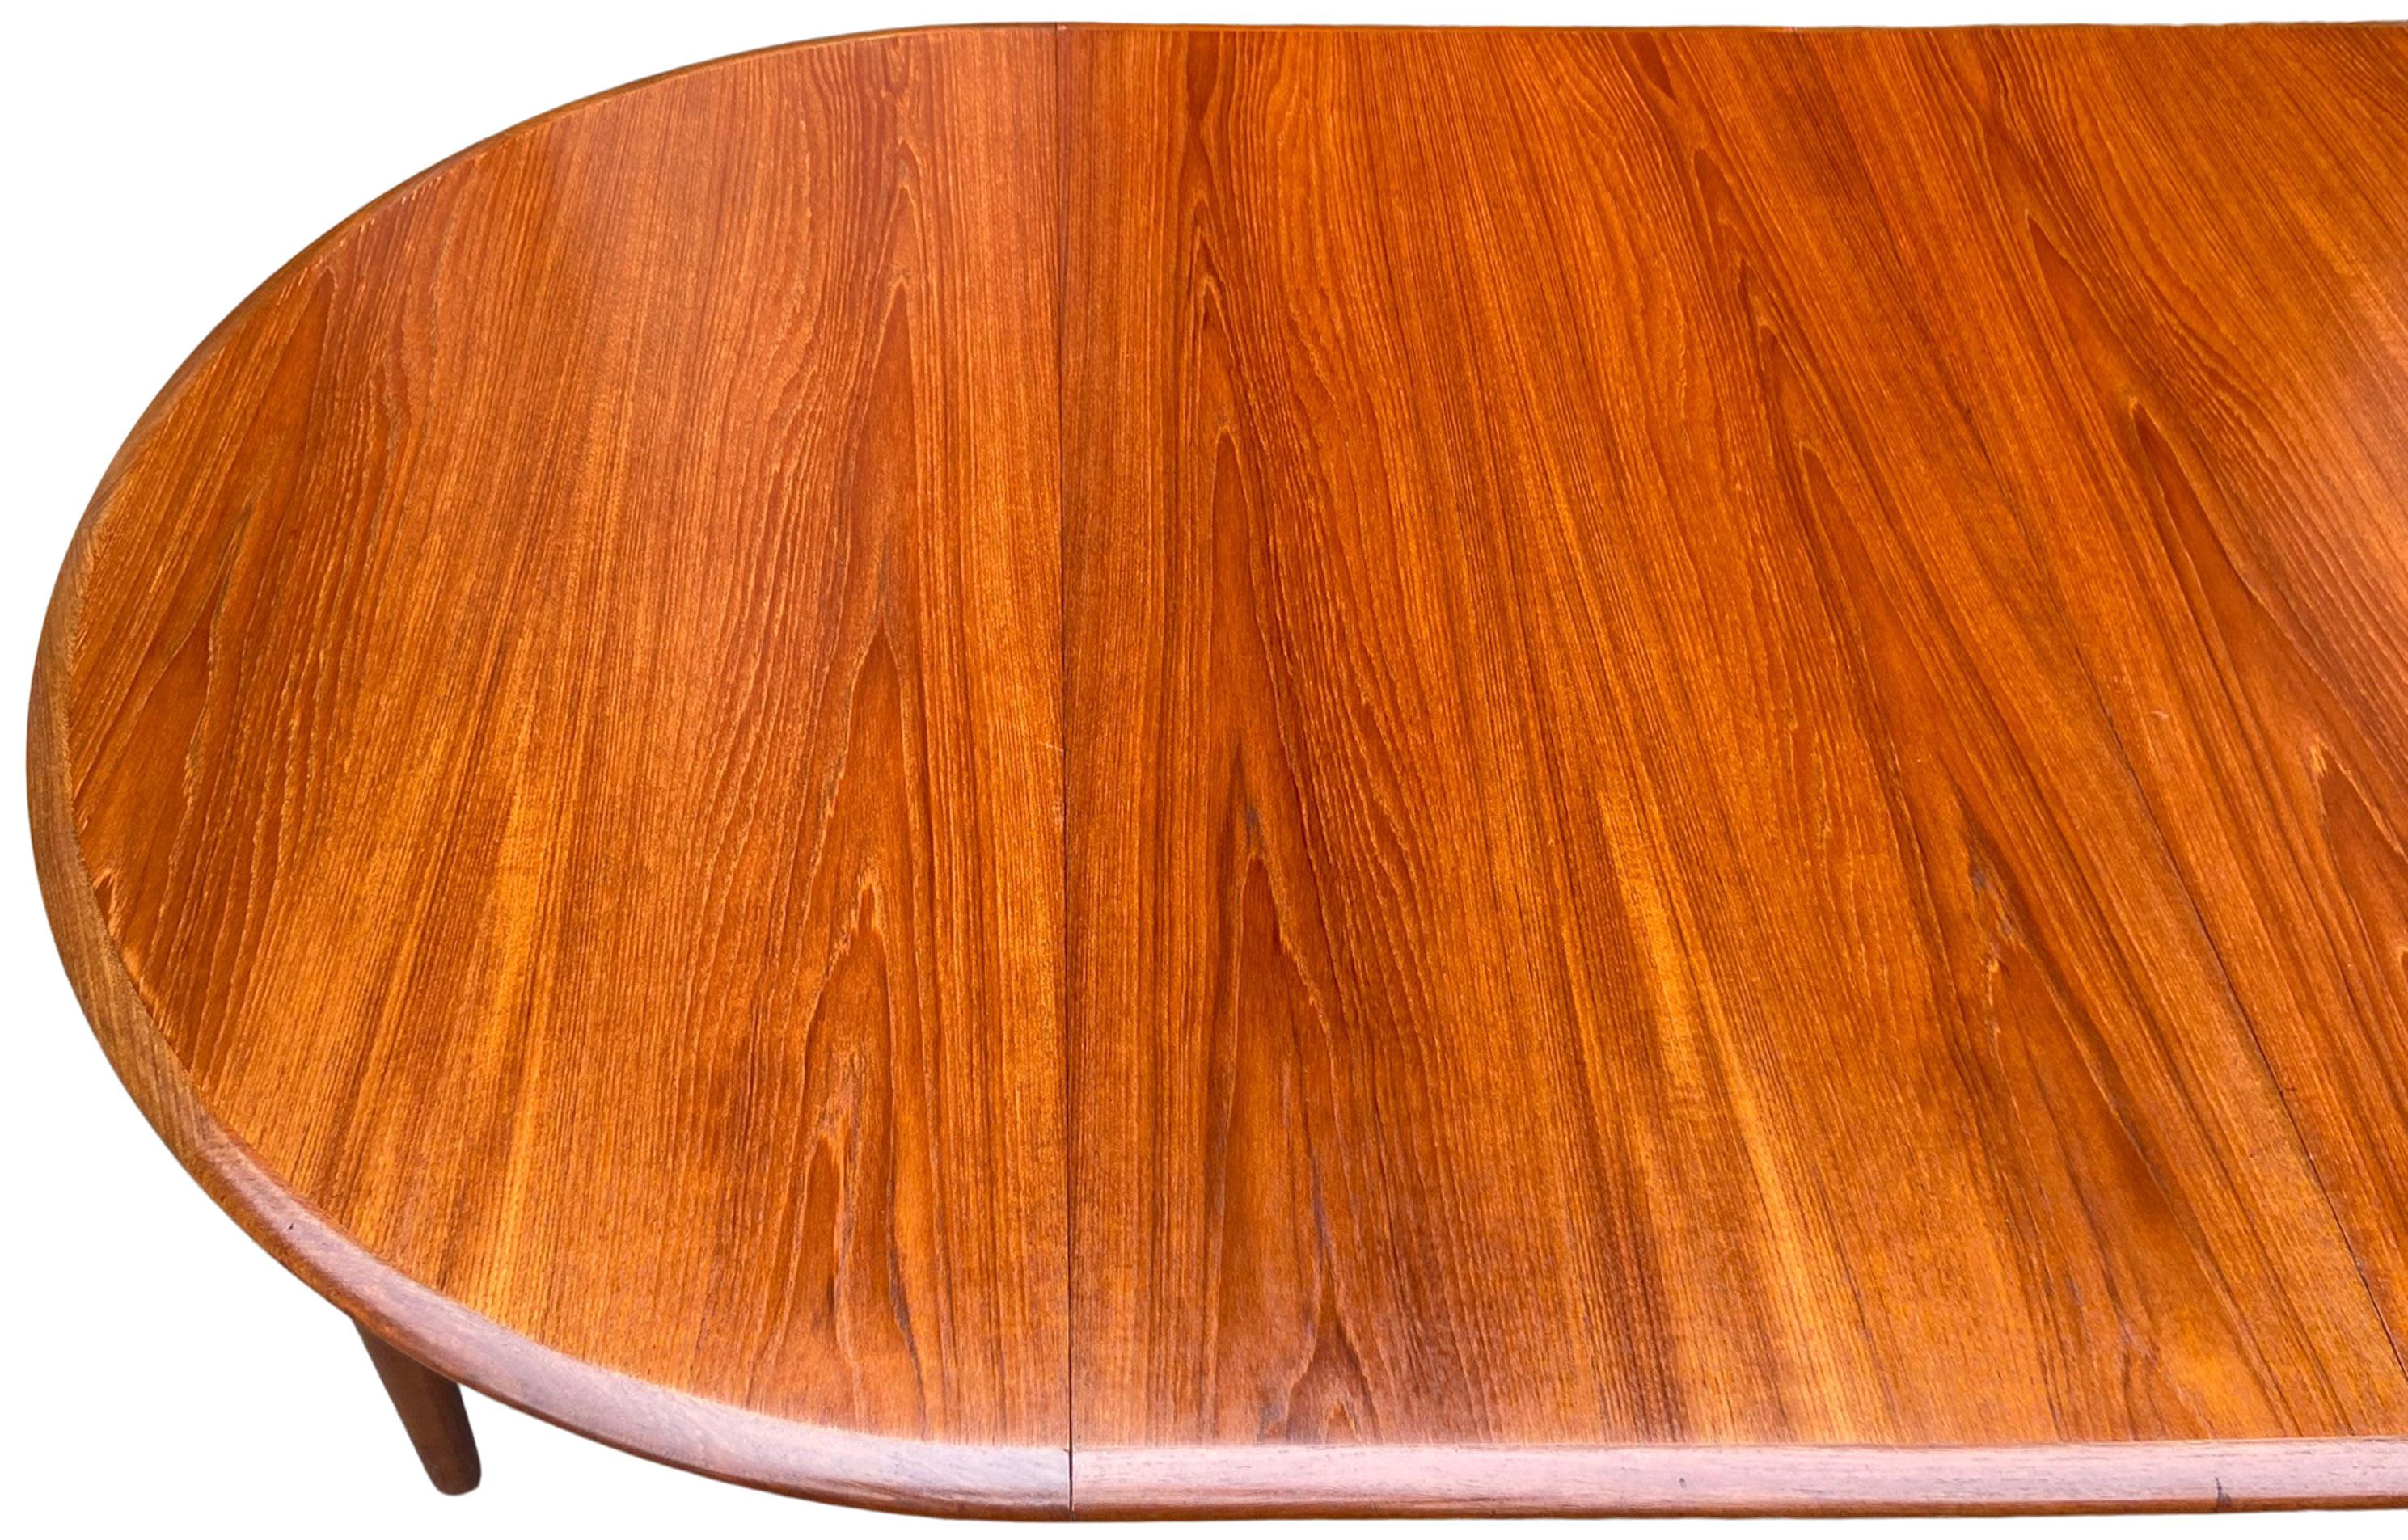 Midcentury Elliptical Oval Teak Expandable Dining Table '2' Leaves 2